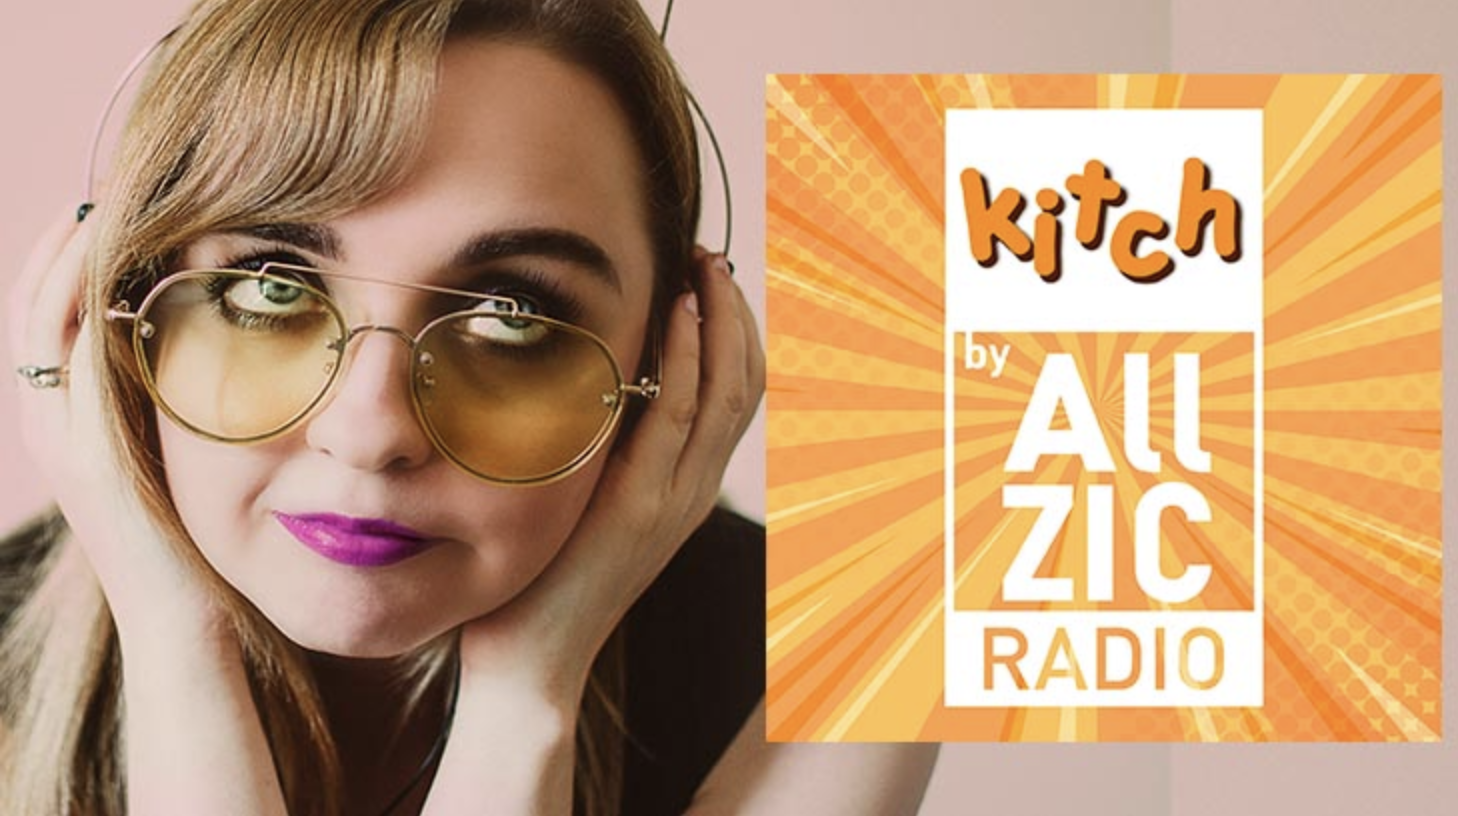 Allzic Radio KITCH arrive enfin!